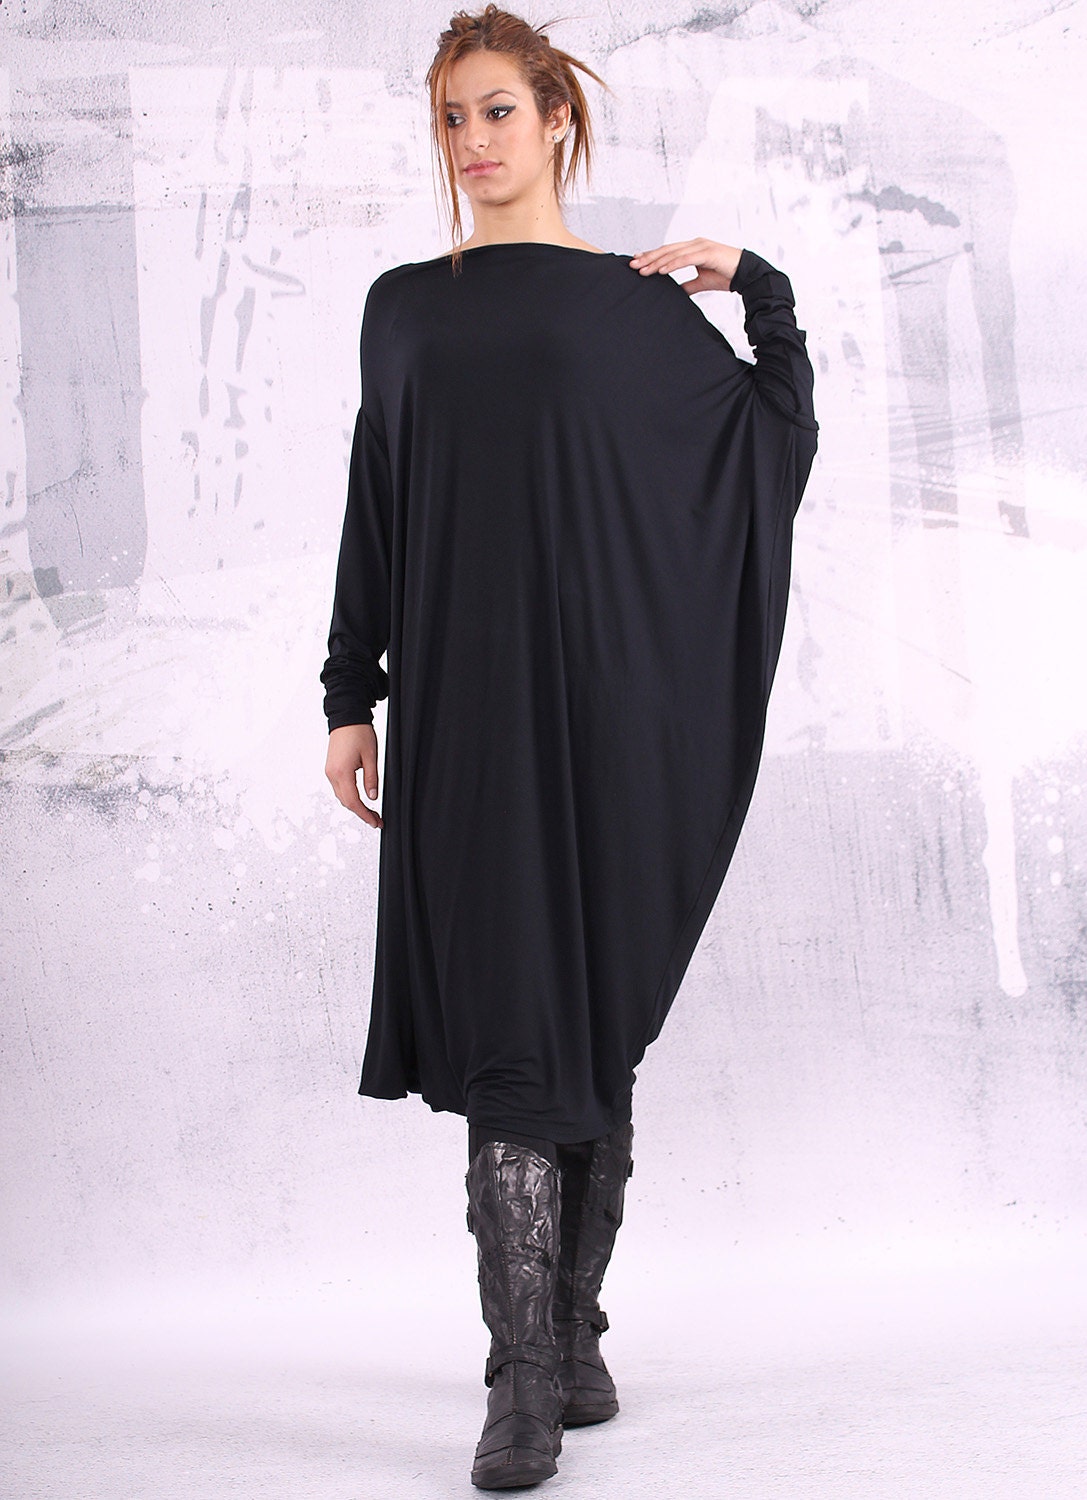 Black dress/ extravagant tunic asymmetric tunic dress plus | Etsy